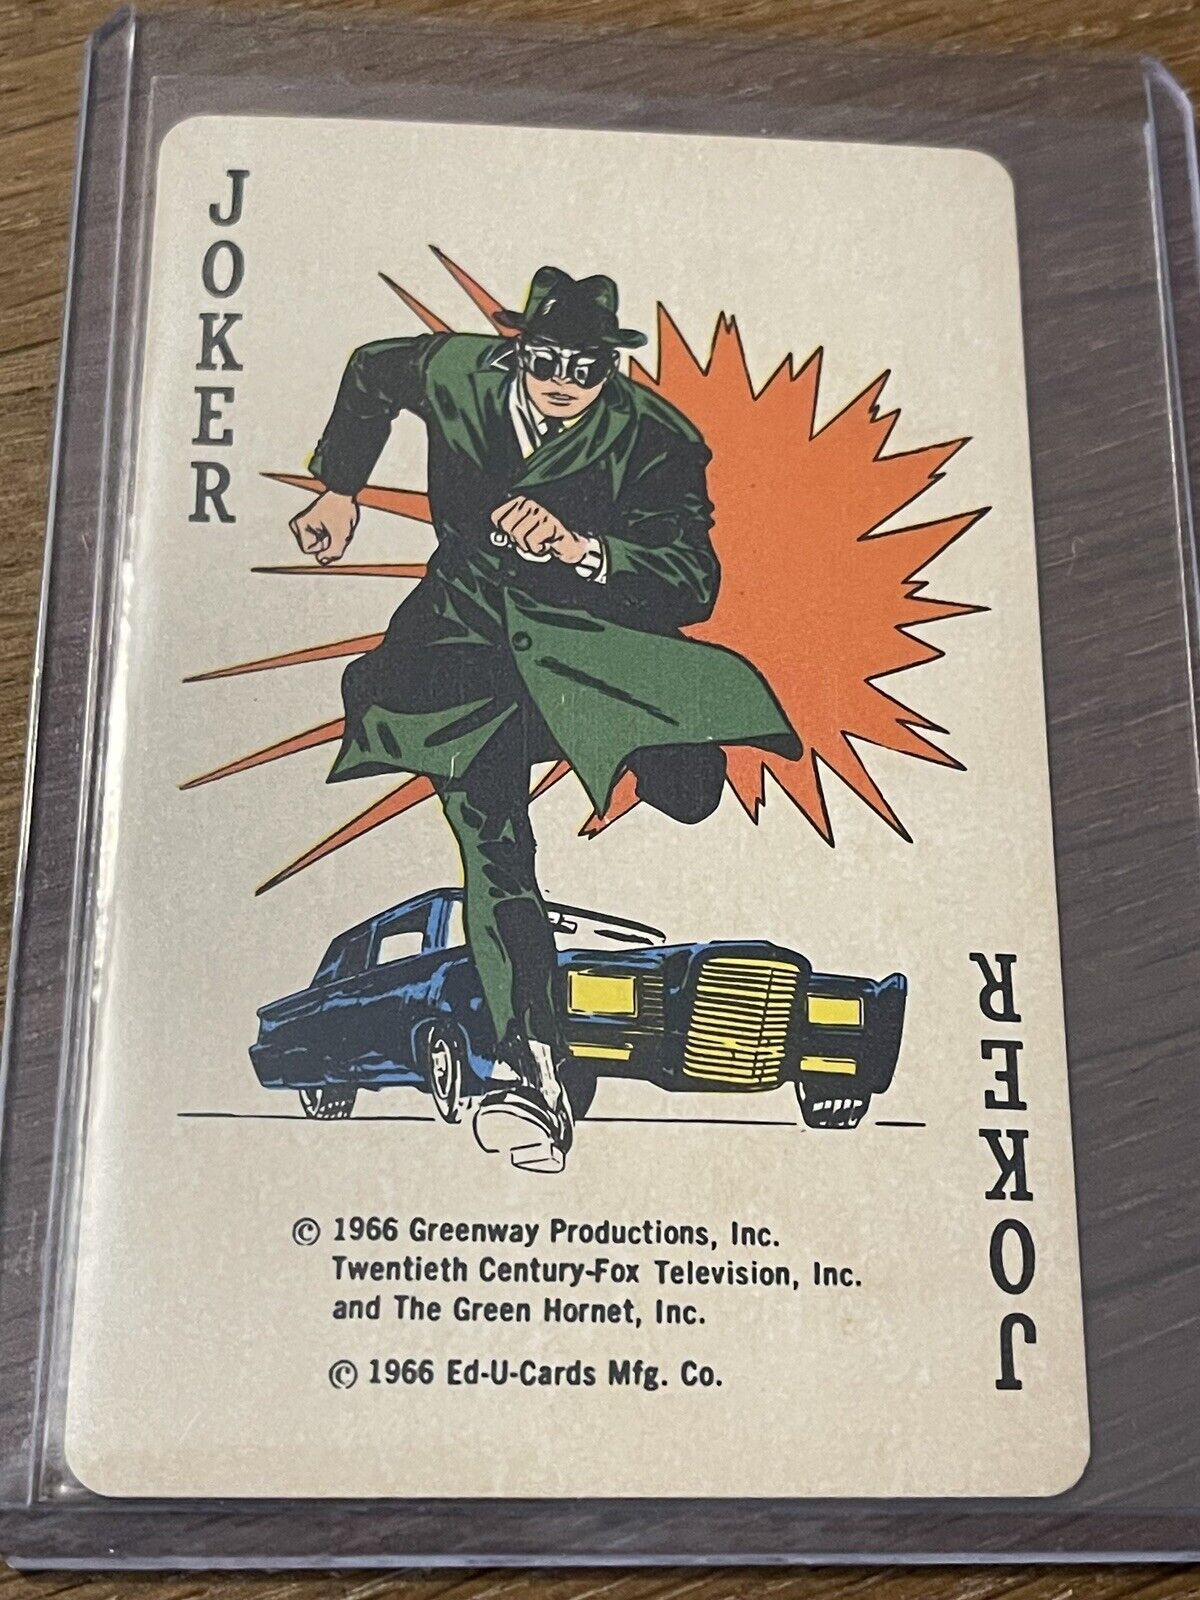 1966 Twentieth Century-Fox Green Hornet Bruce Lee JOKER CARD Game Playing Card